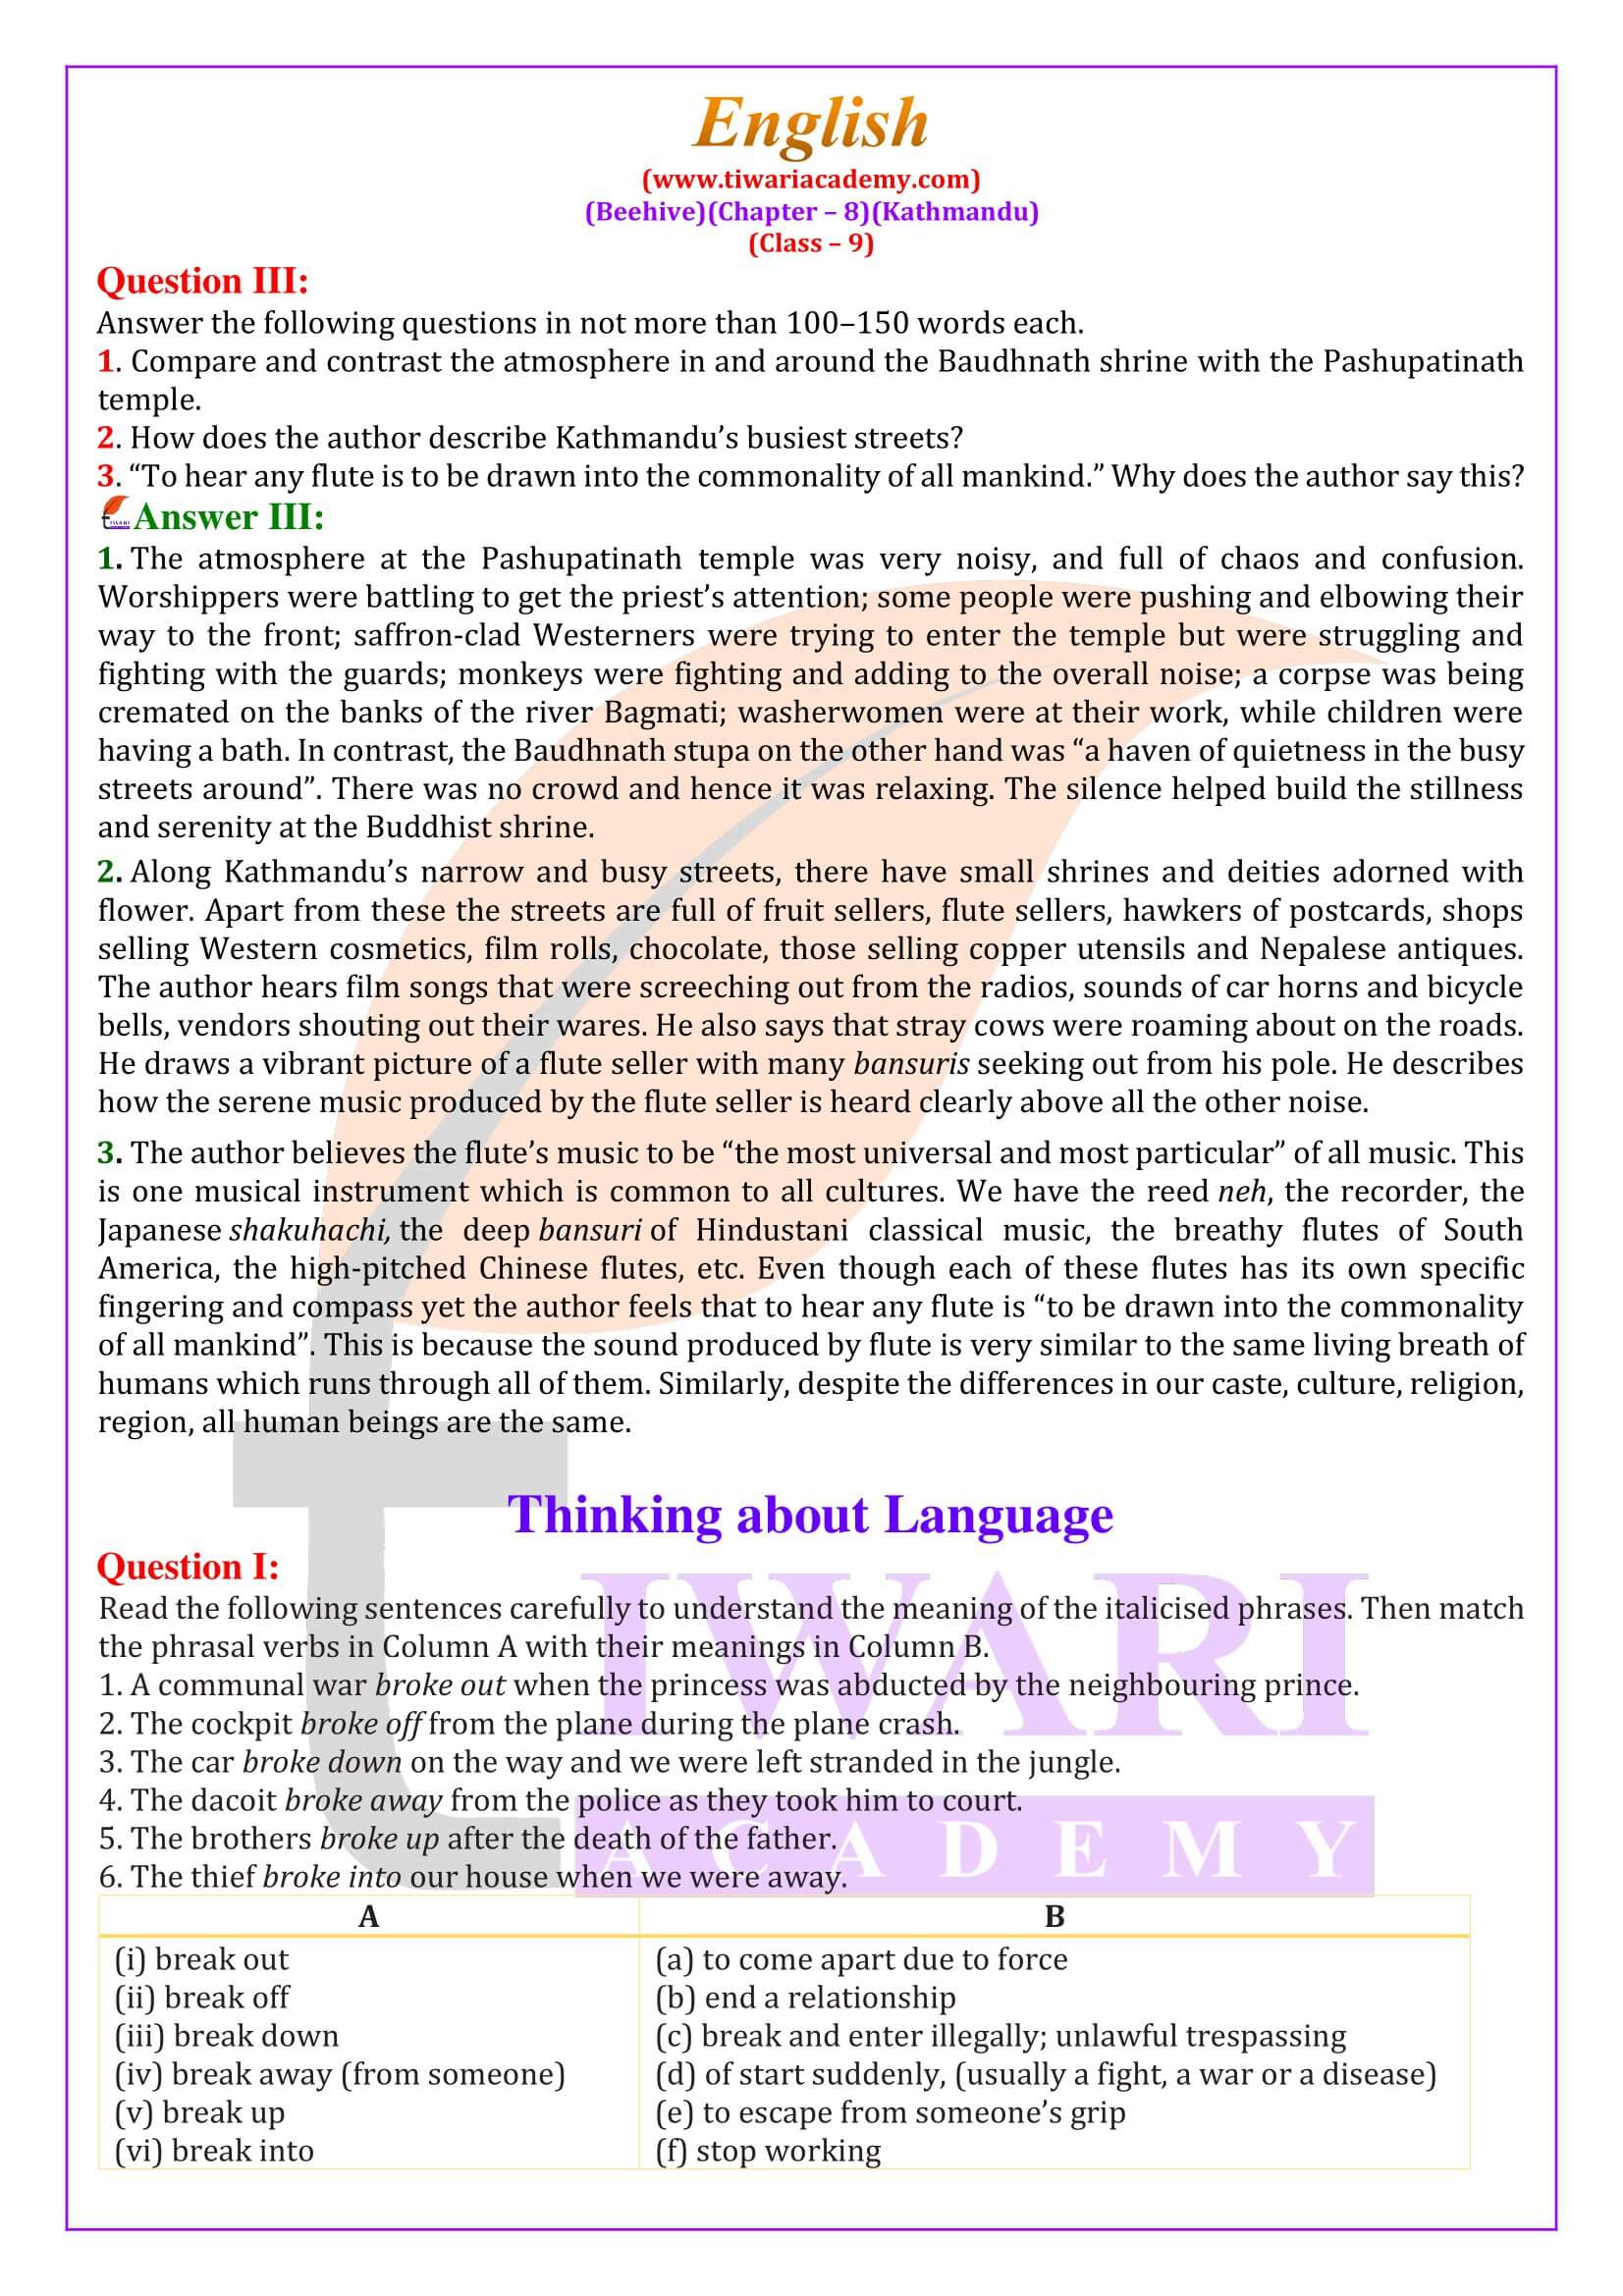 NCERT Solution Class 9 English Beehive Chapter 8 Kathmandu